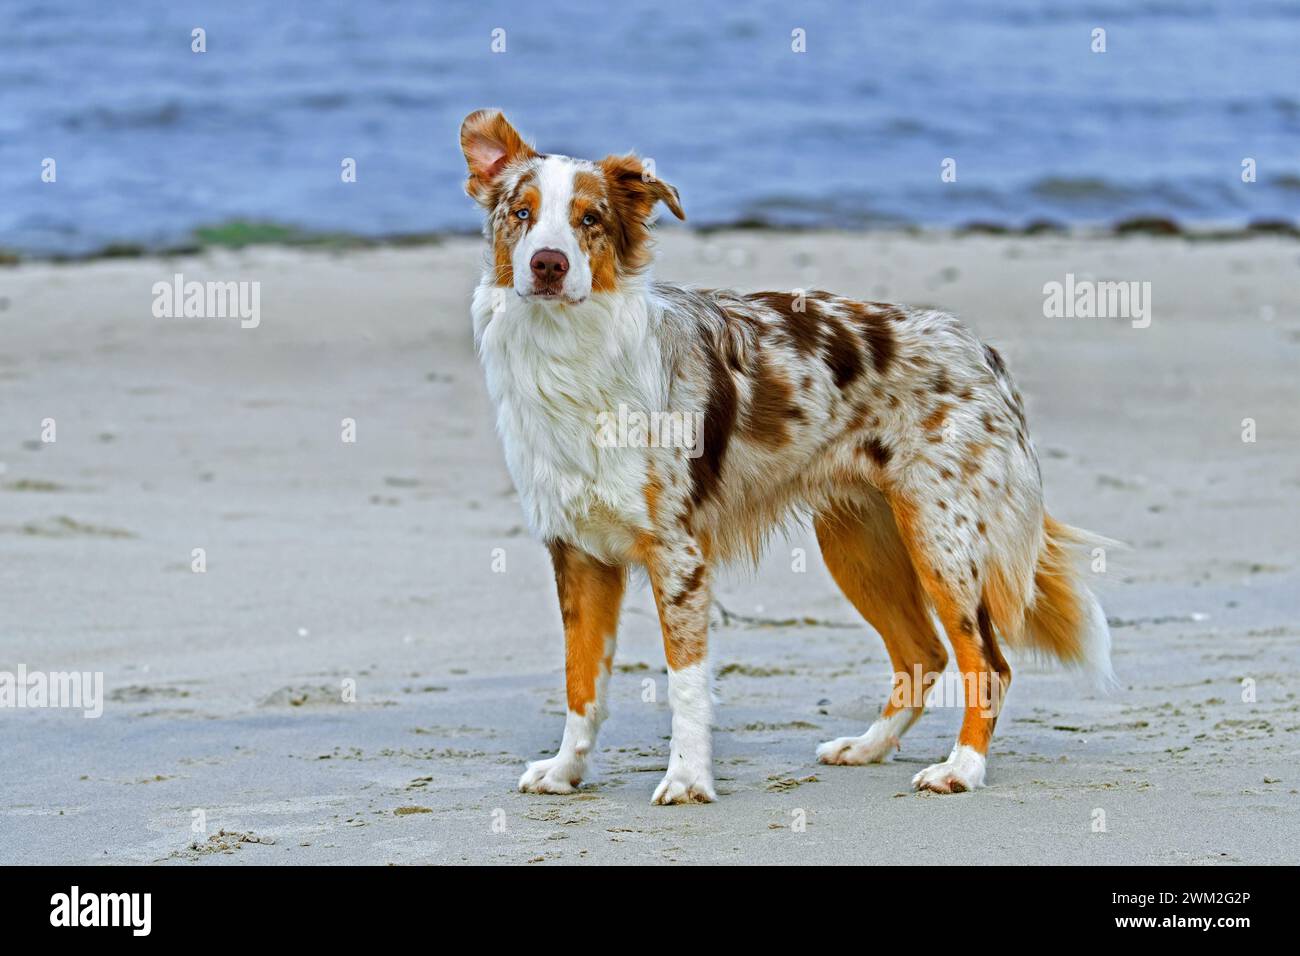 Australian Shepherd / Aussie, breed of herding dog from the United States, on sandy beach Stock Photo